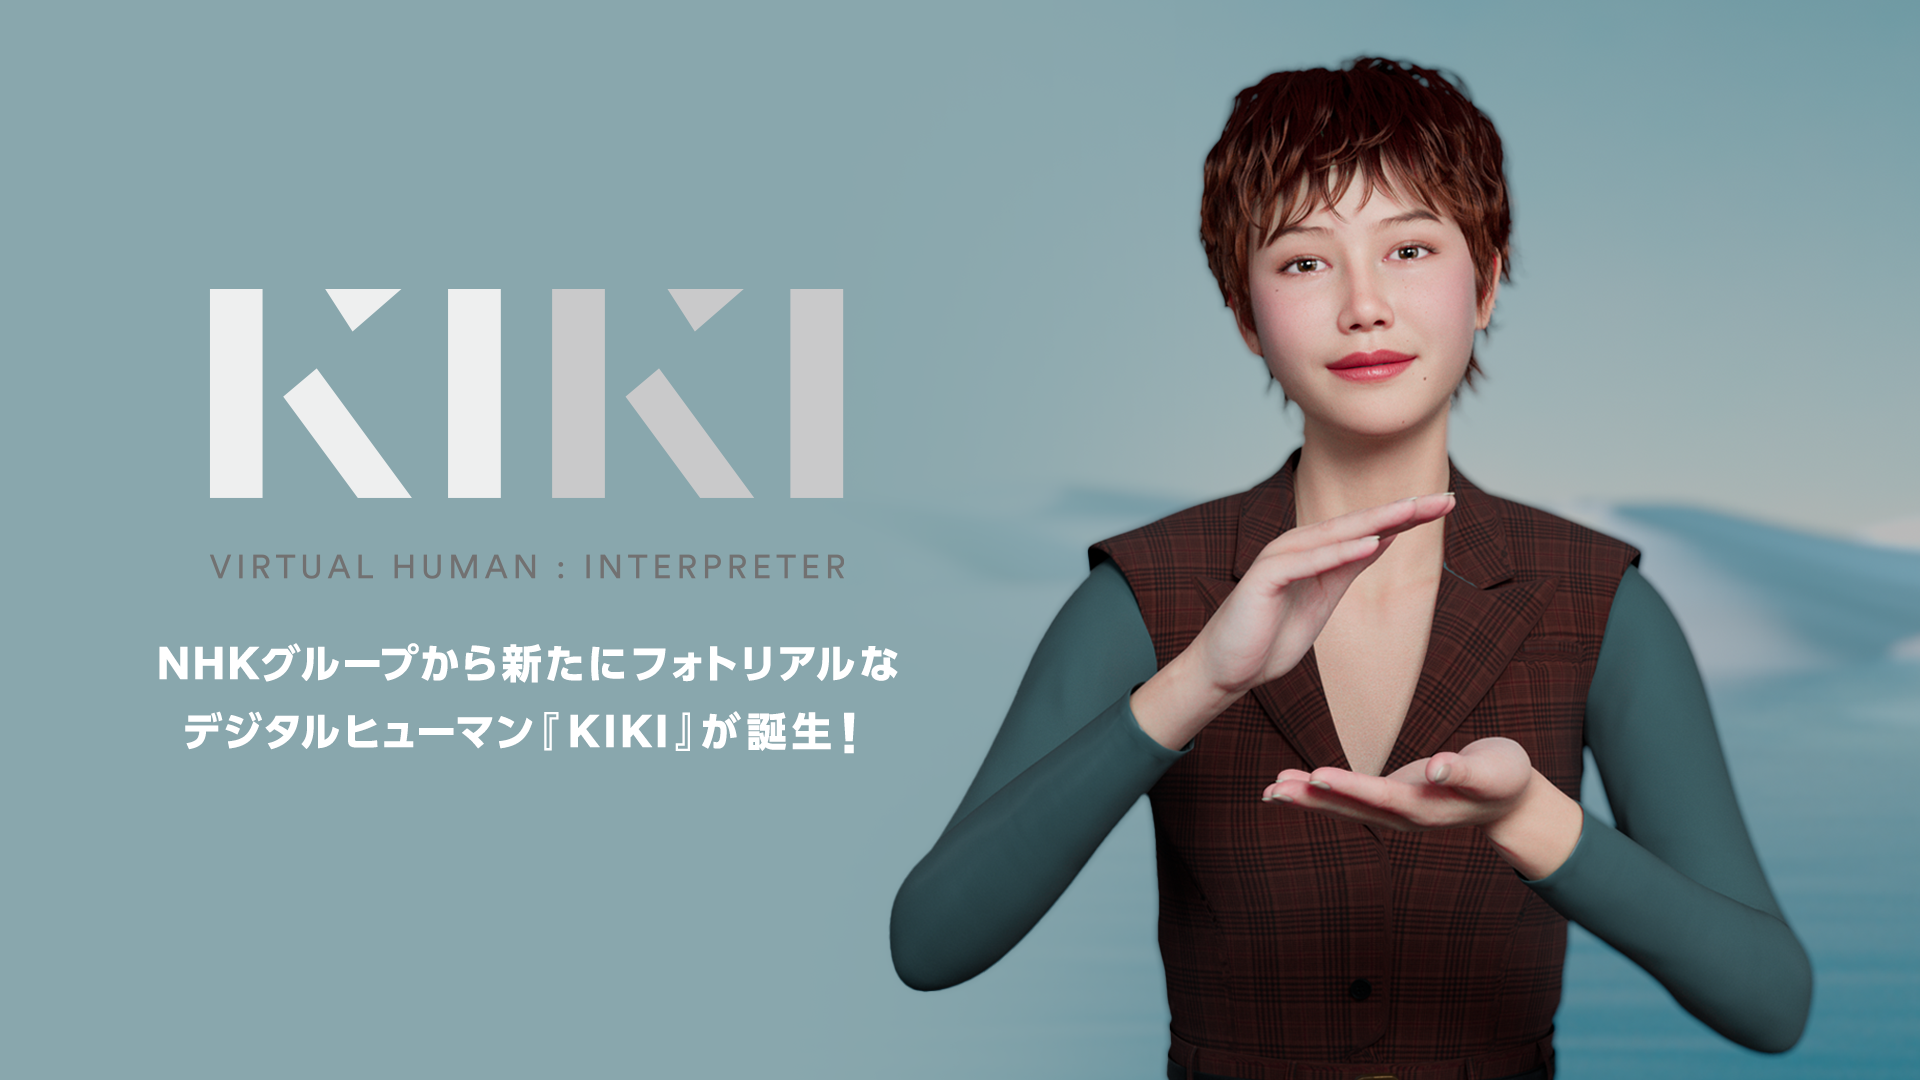 KIKI VIRTUAL HUMAN : INTERPRETER  NHKgroupから新たにフォトリアルなデジタルヒューマン『KIKI』が誕生！